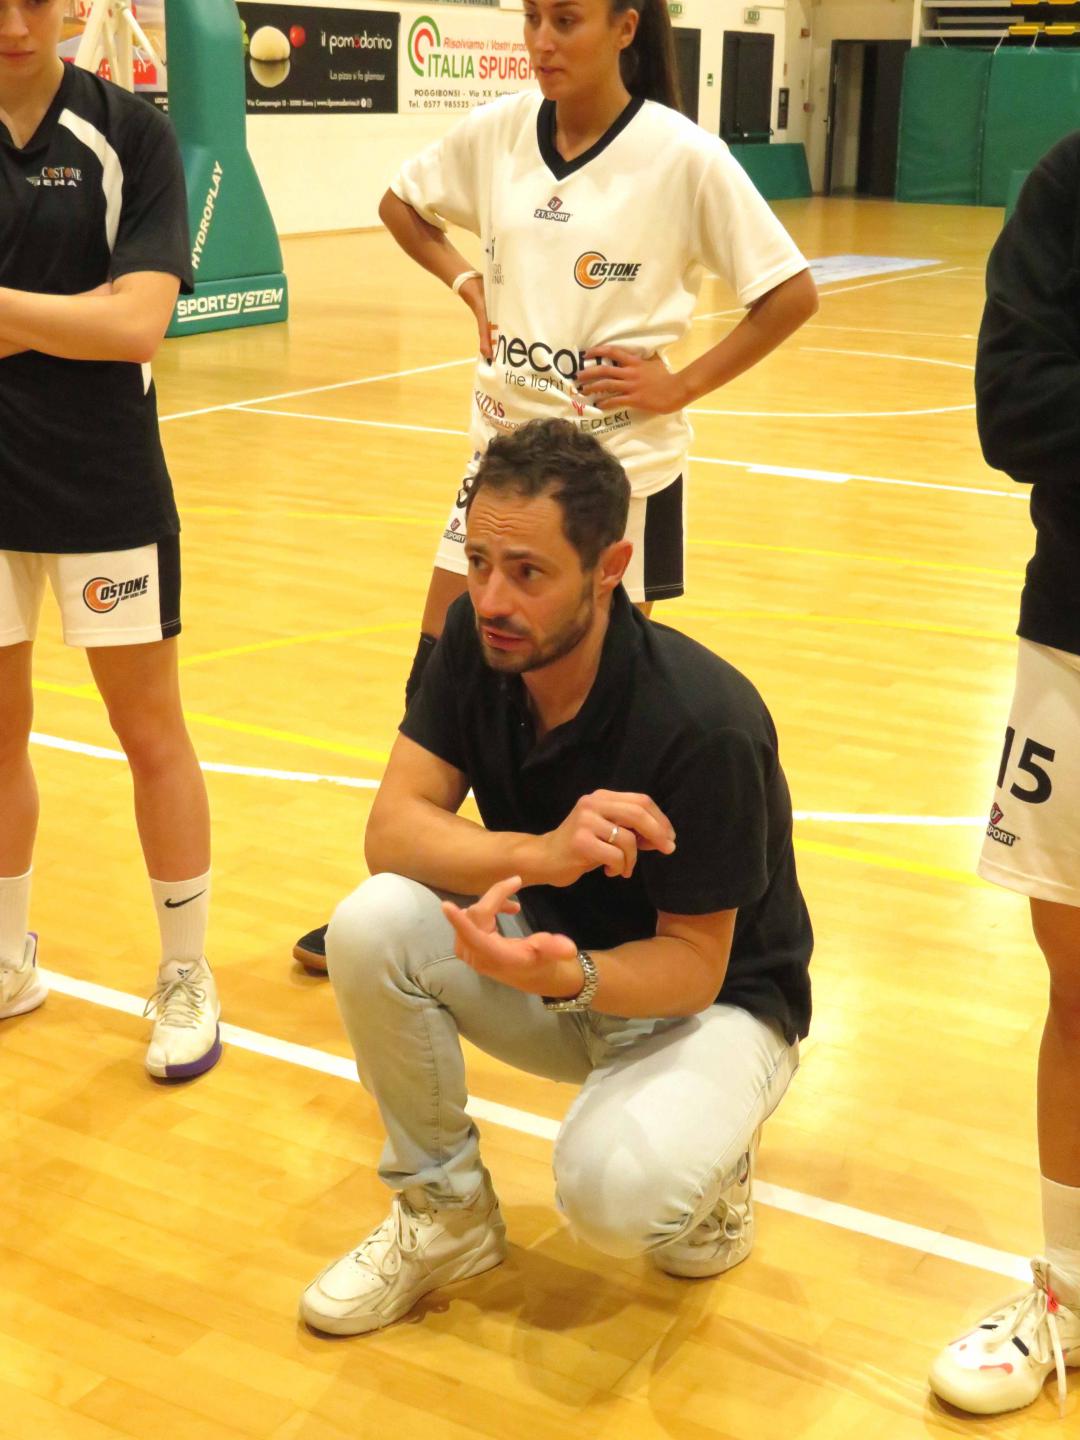 Coach Marco Meoni